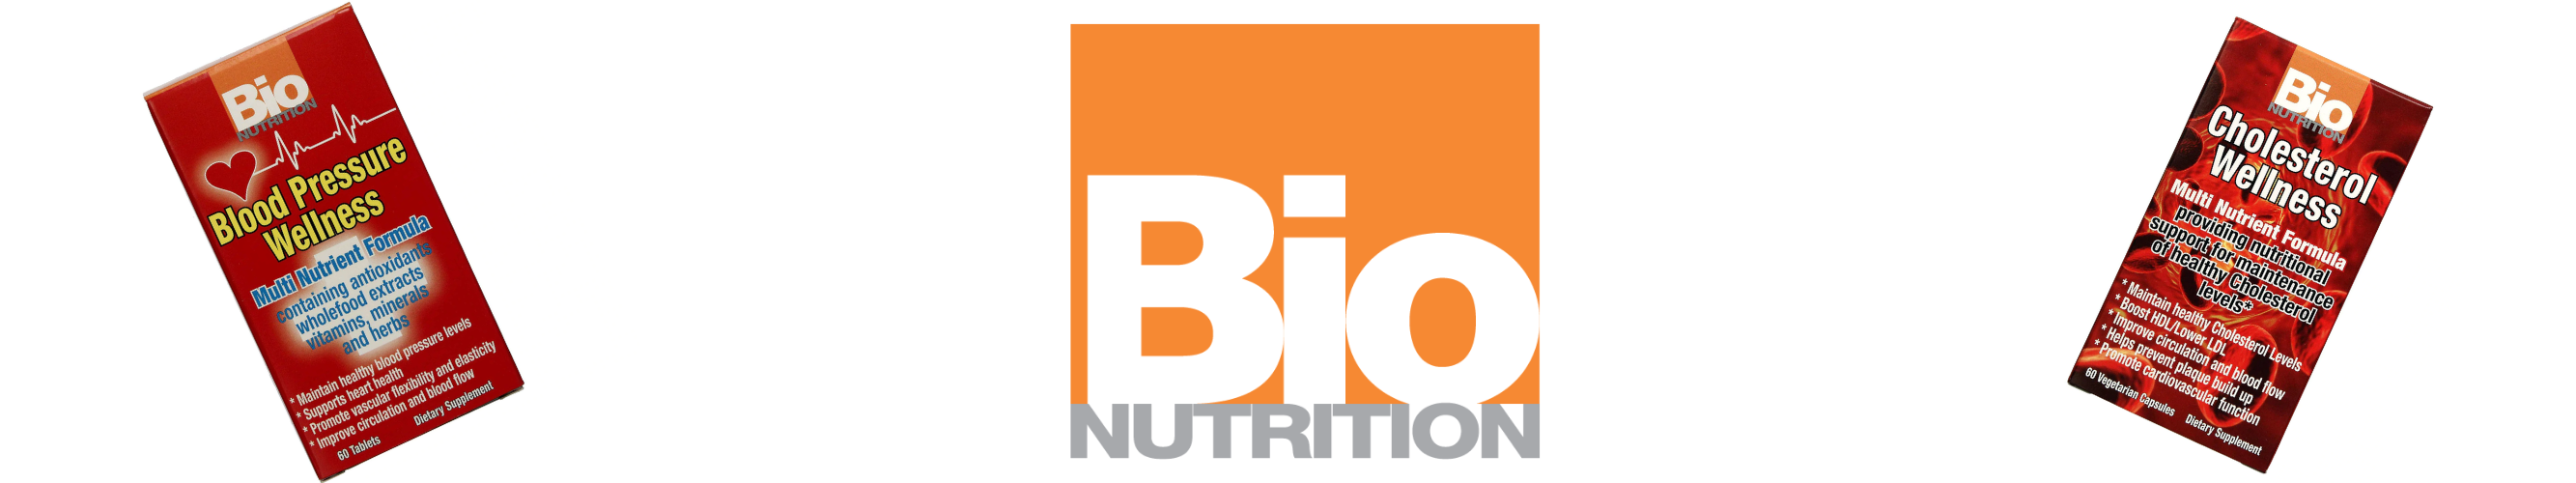 HiLife Vitamins | Bio Nutrition